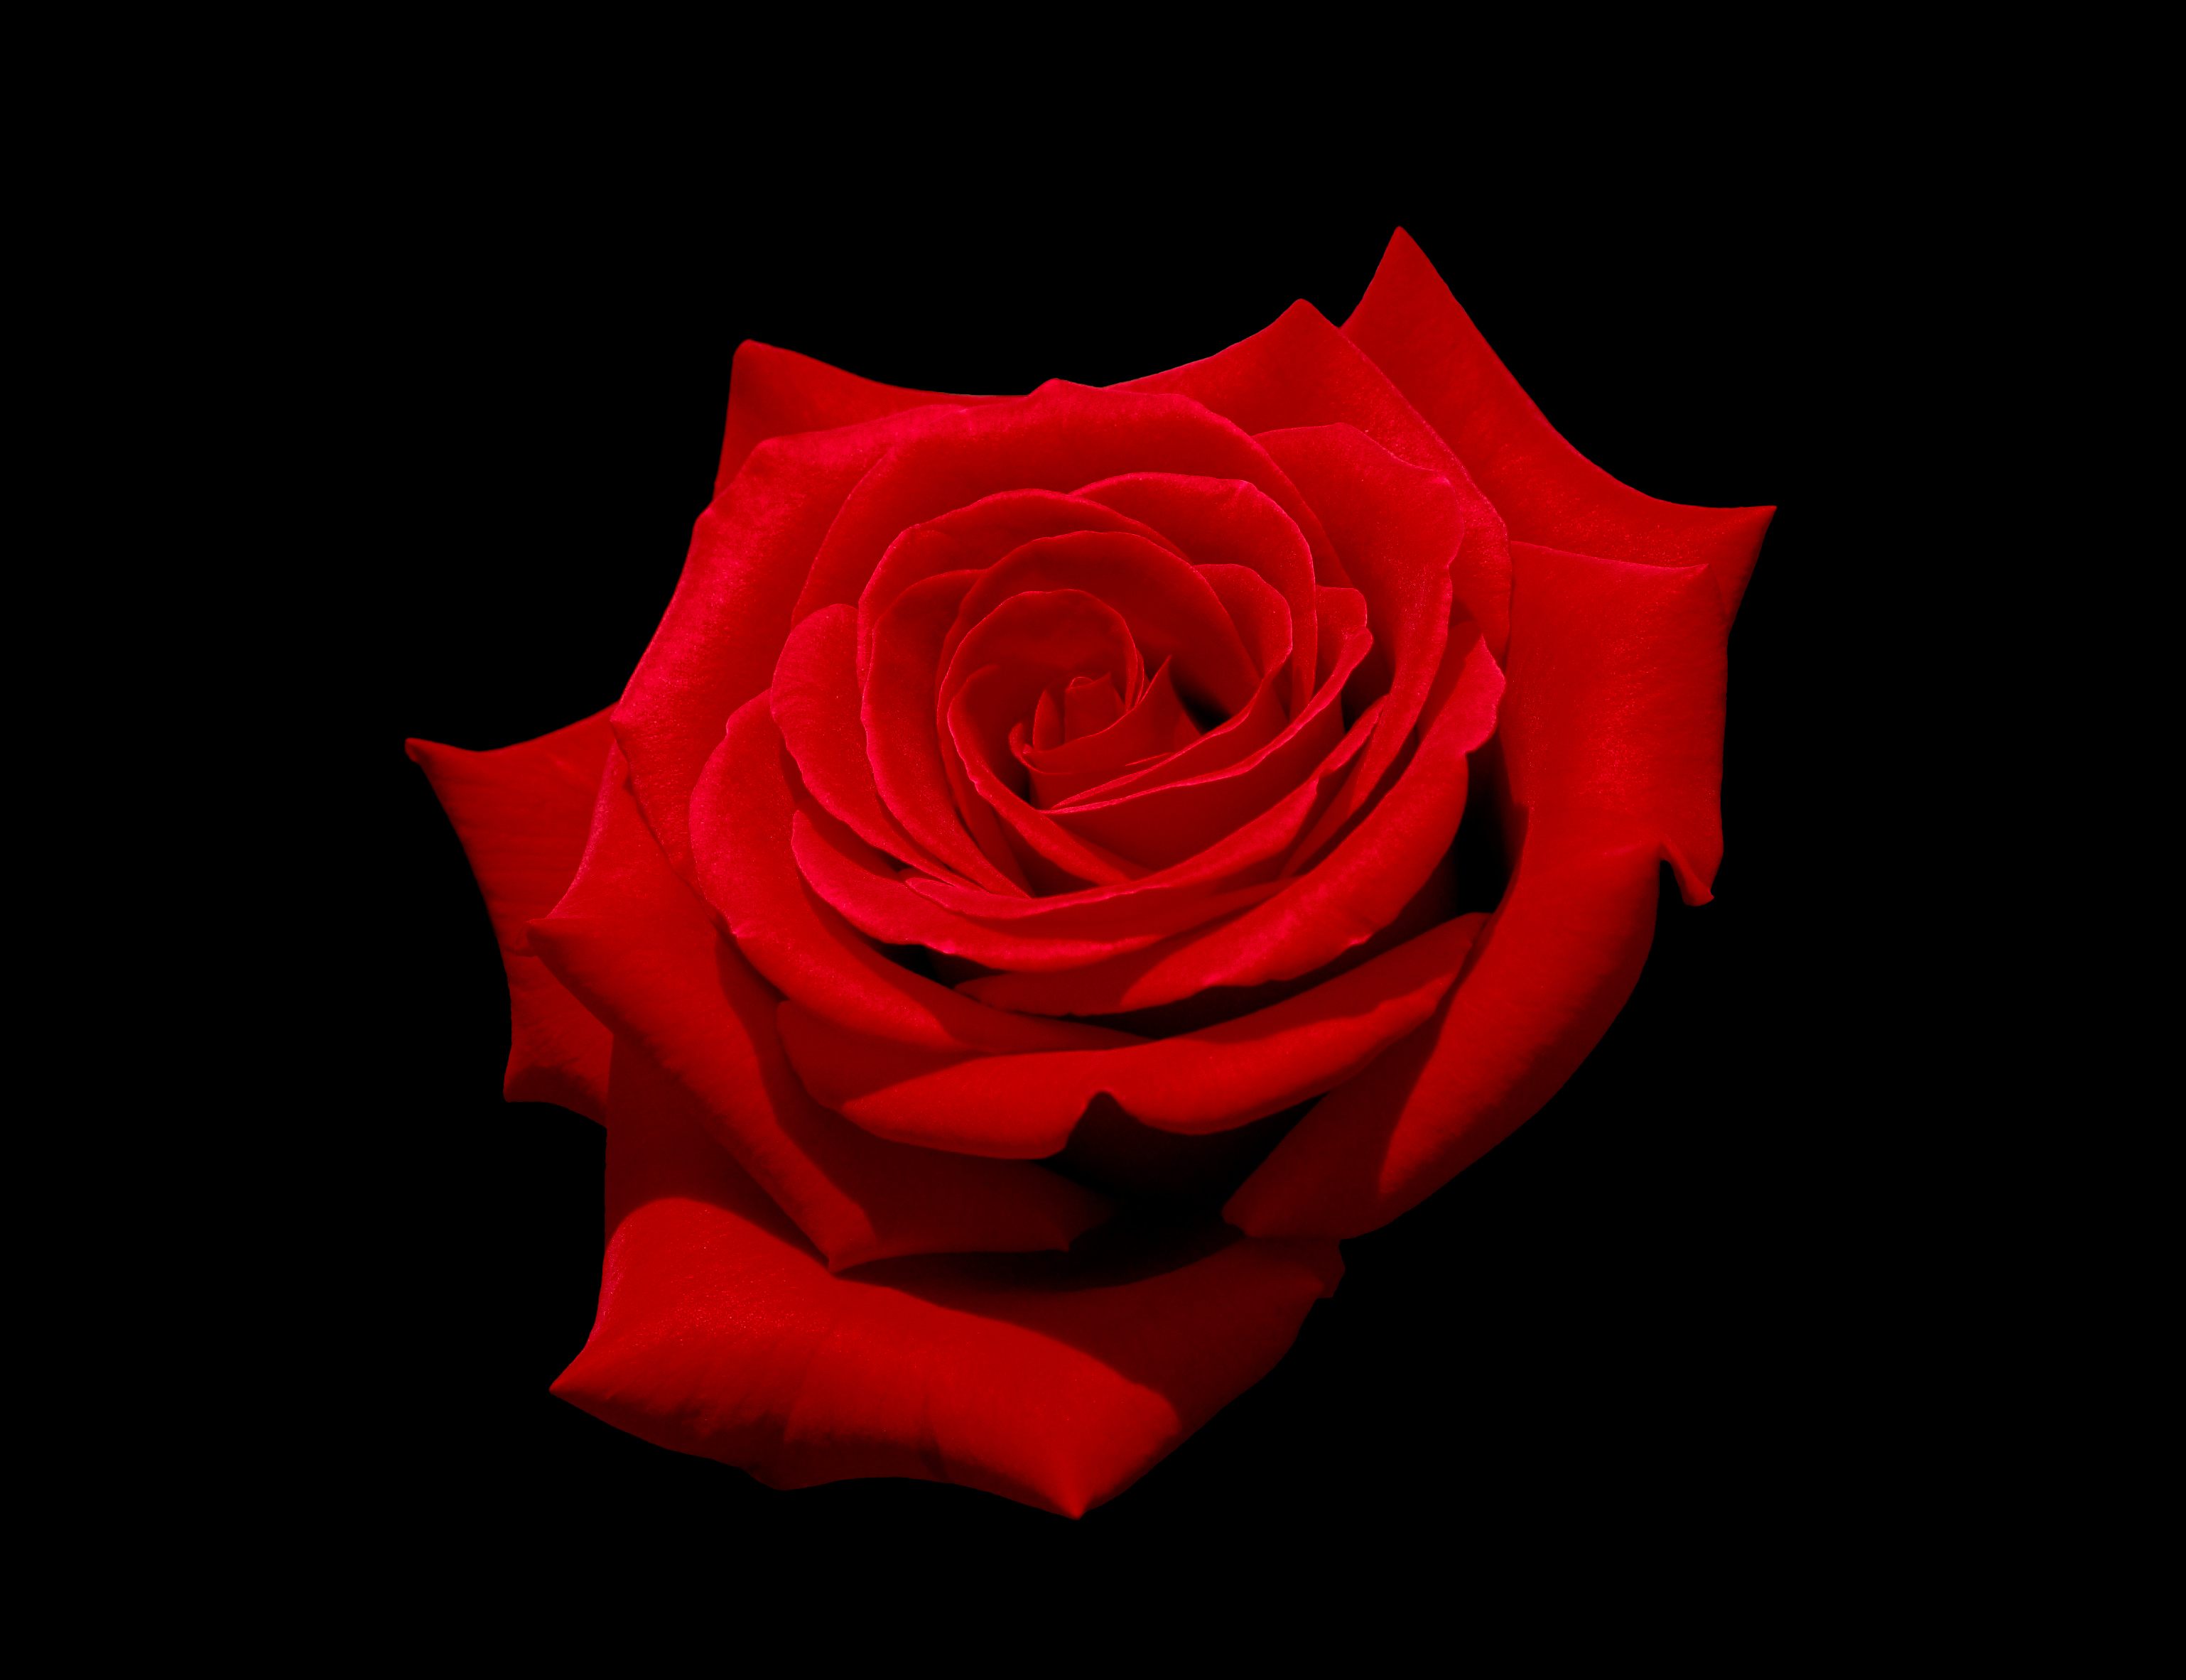 FileRed rose with black backgroundjpg   Wikimedia Commons